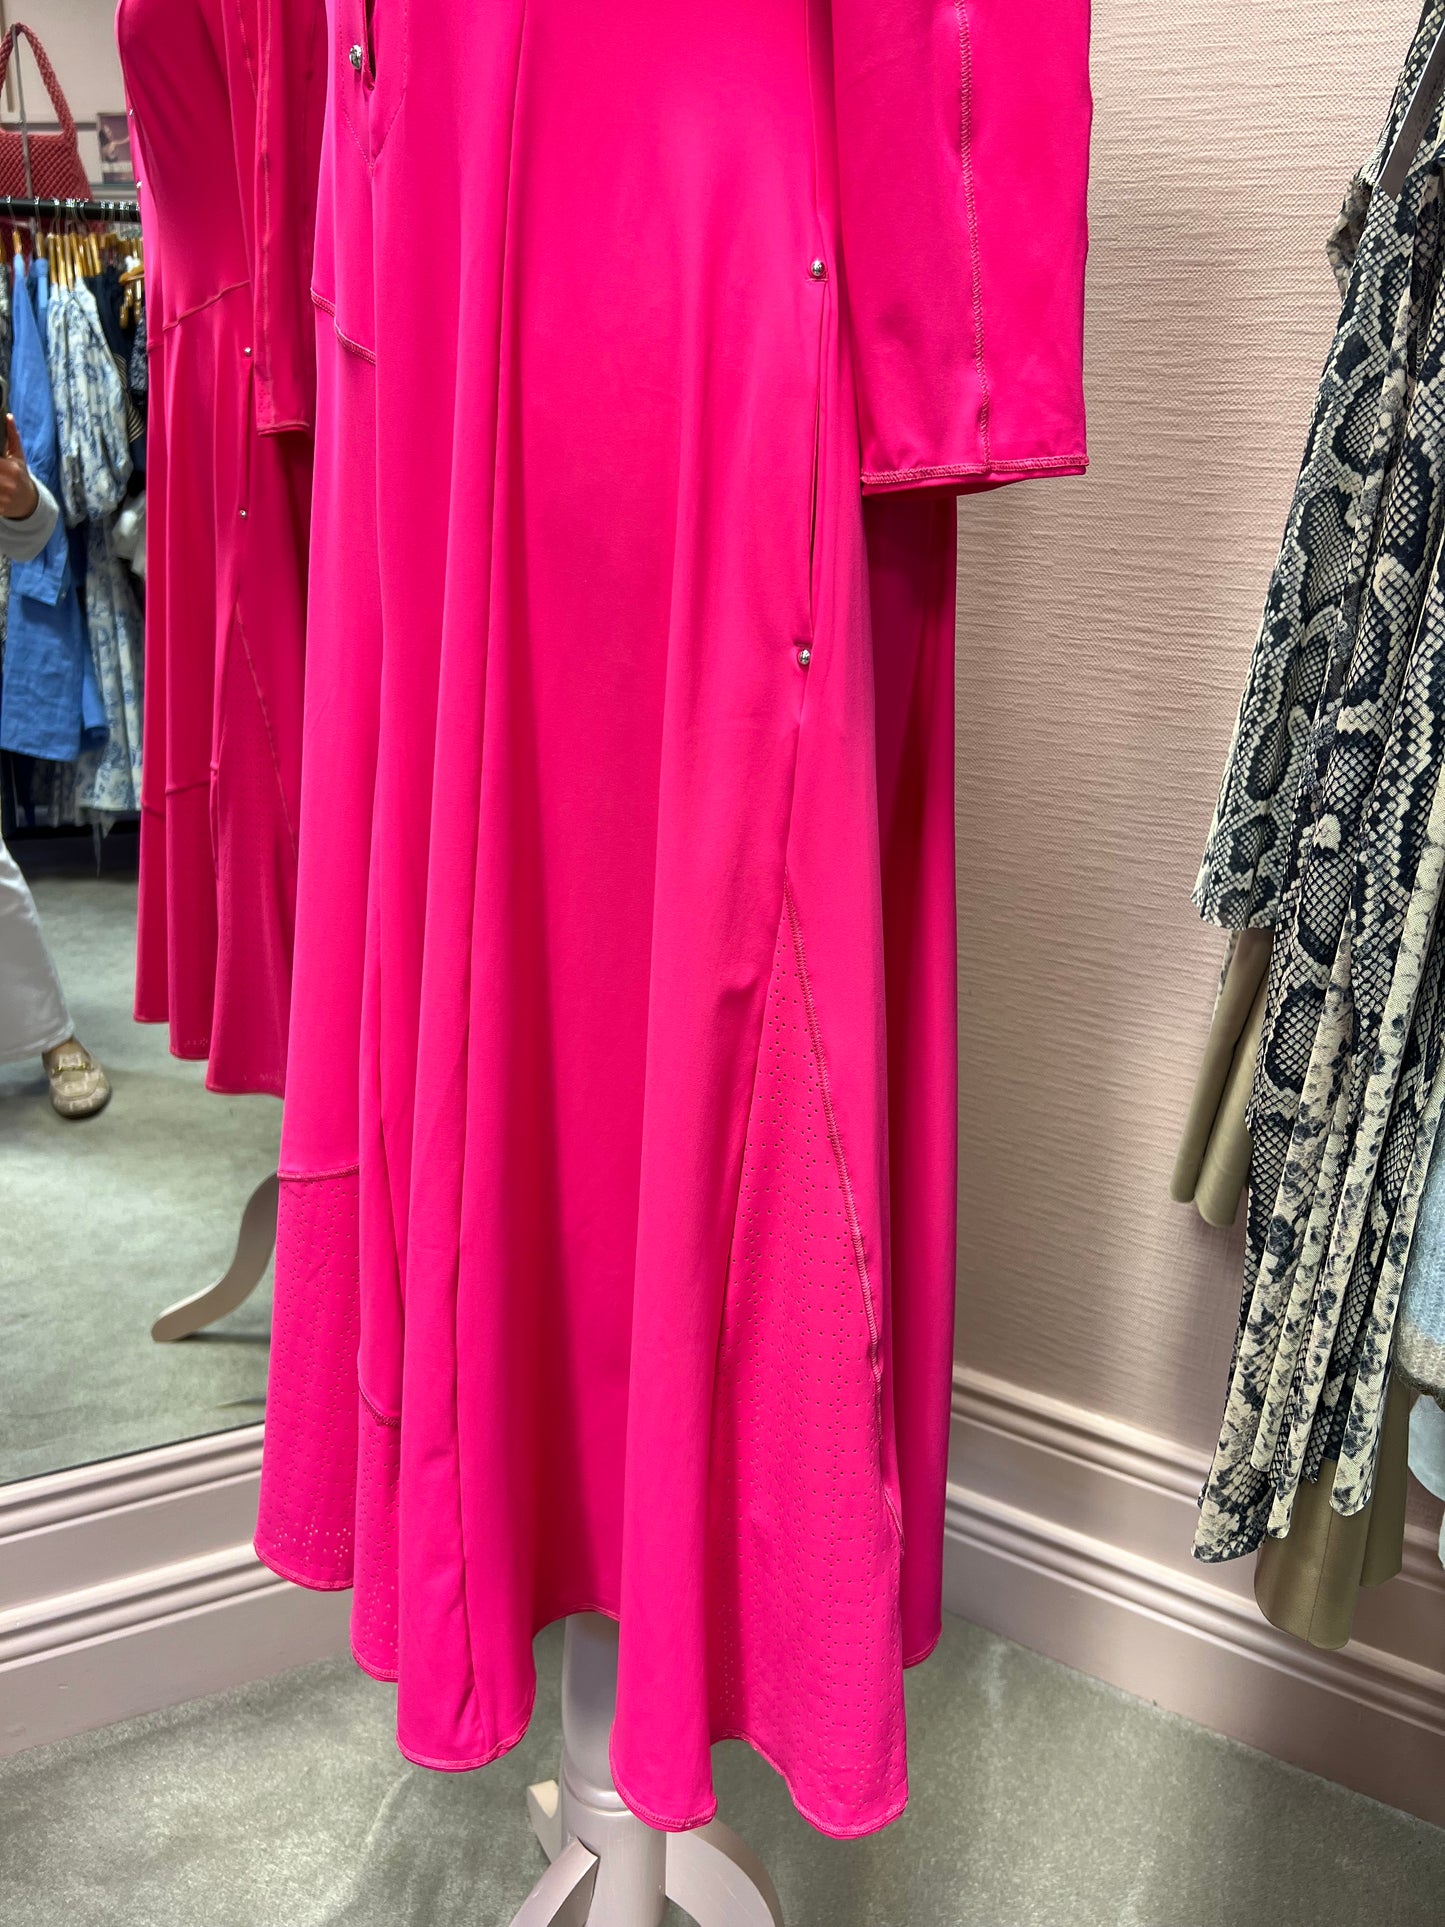 Exhibit Dress in Cerise Pink